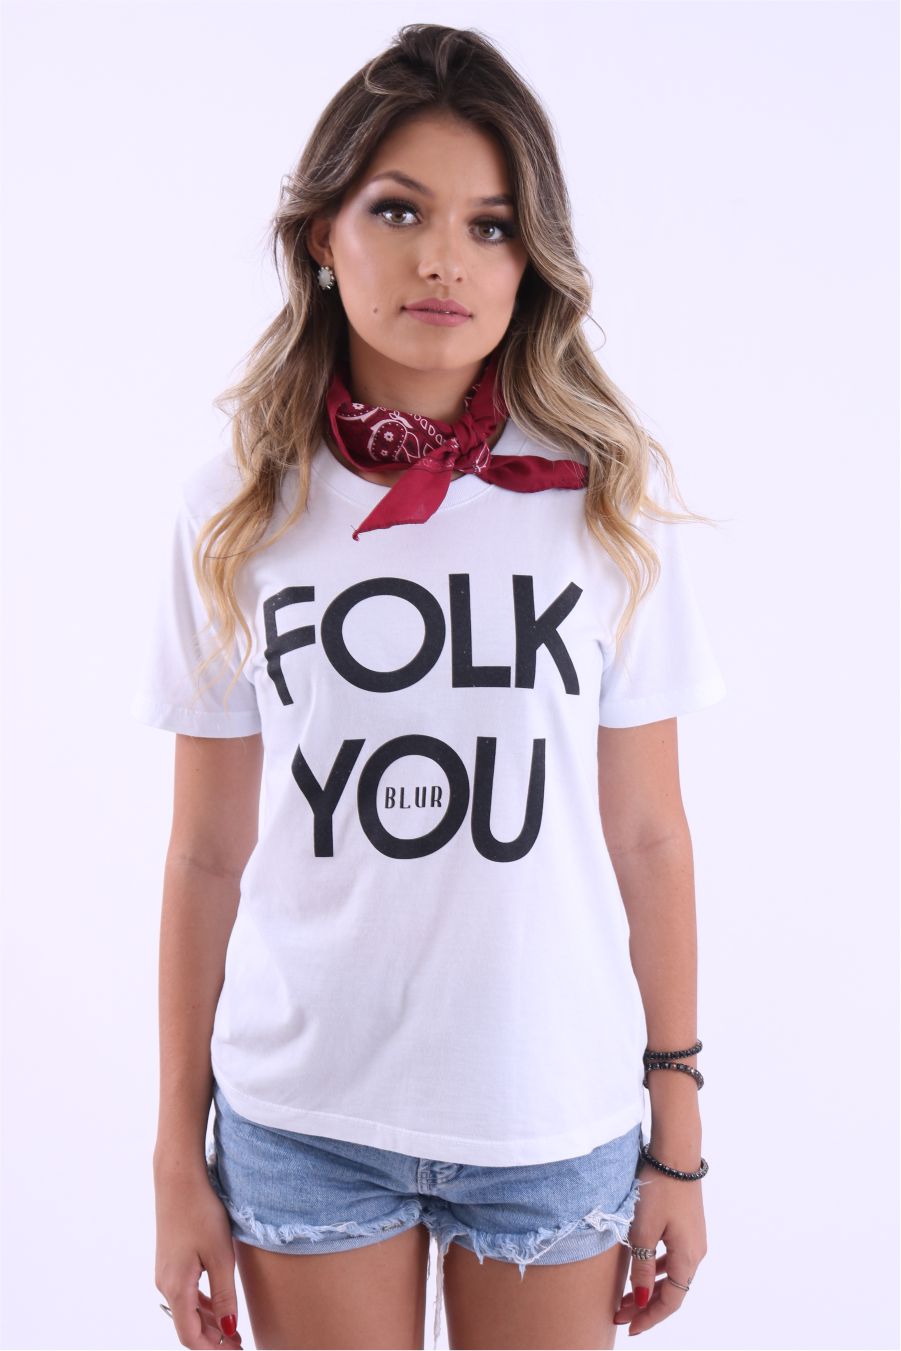 Camiseta Feminina Folk You Blur by Little Rock - Foto 0